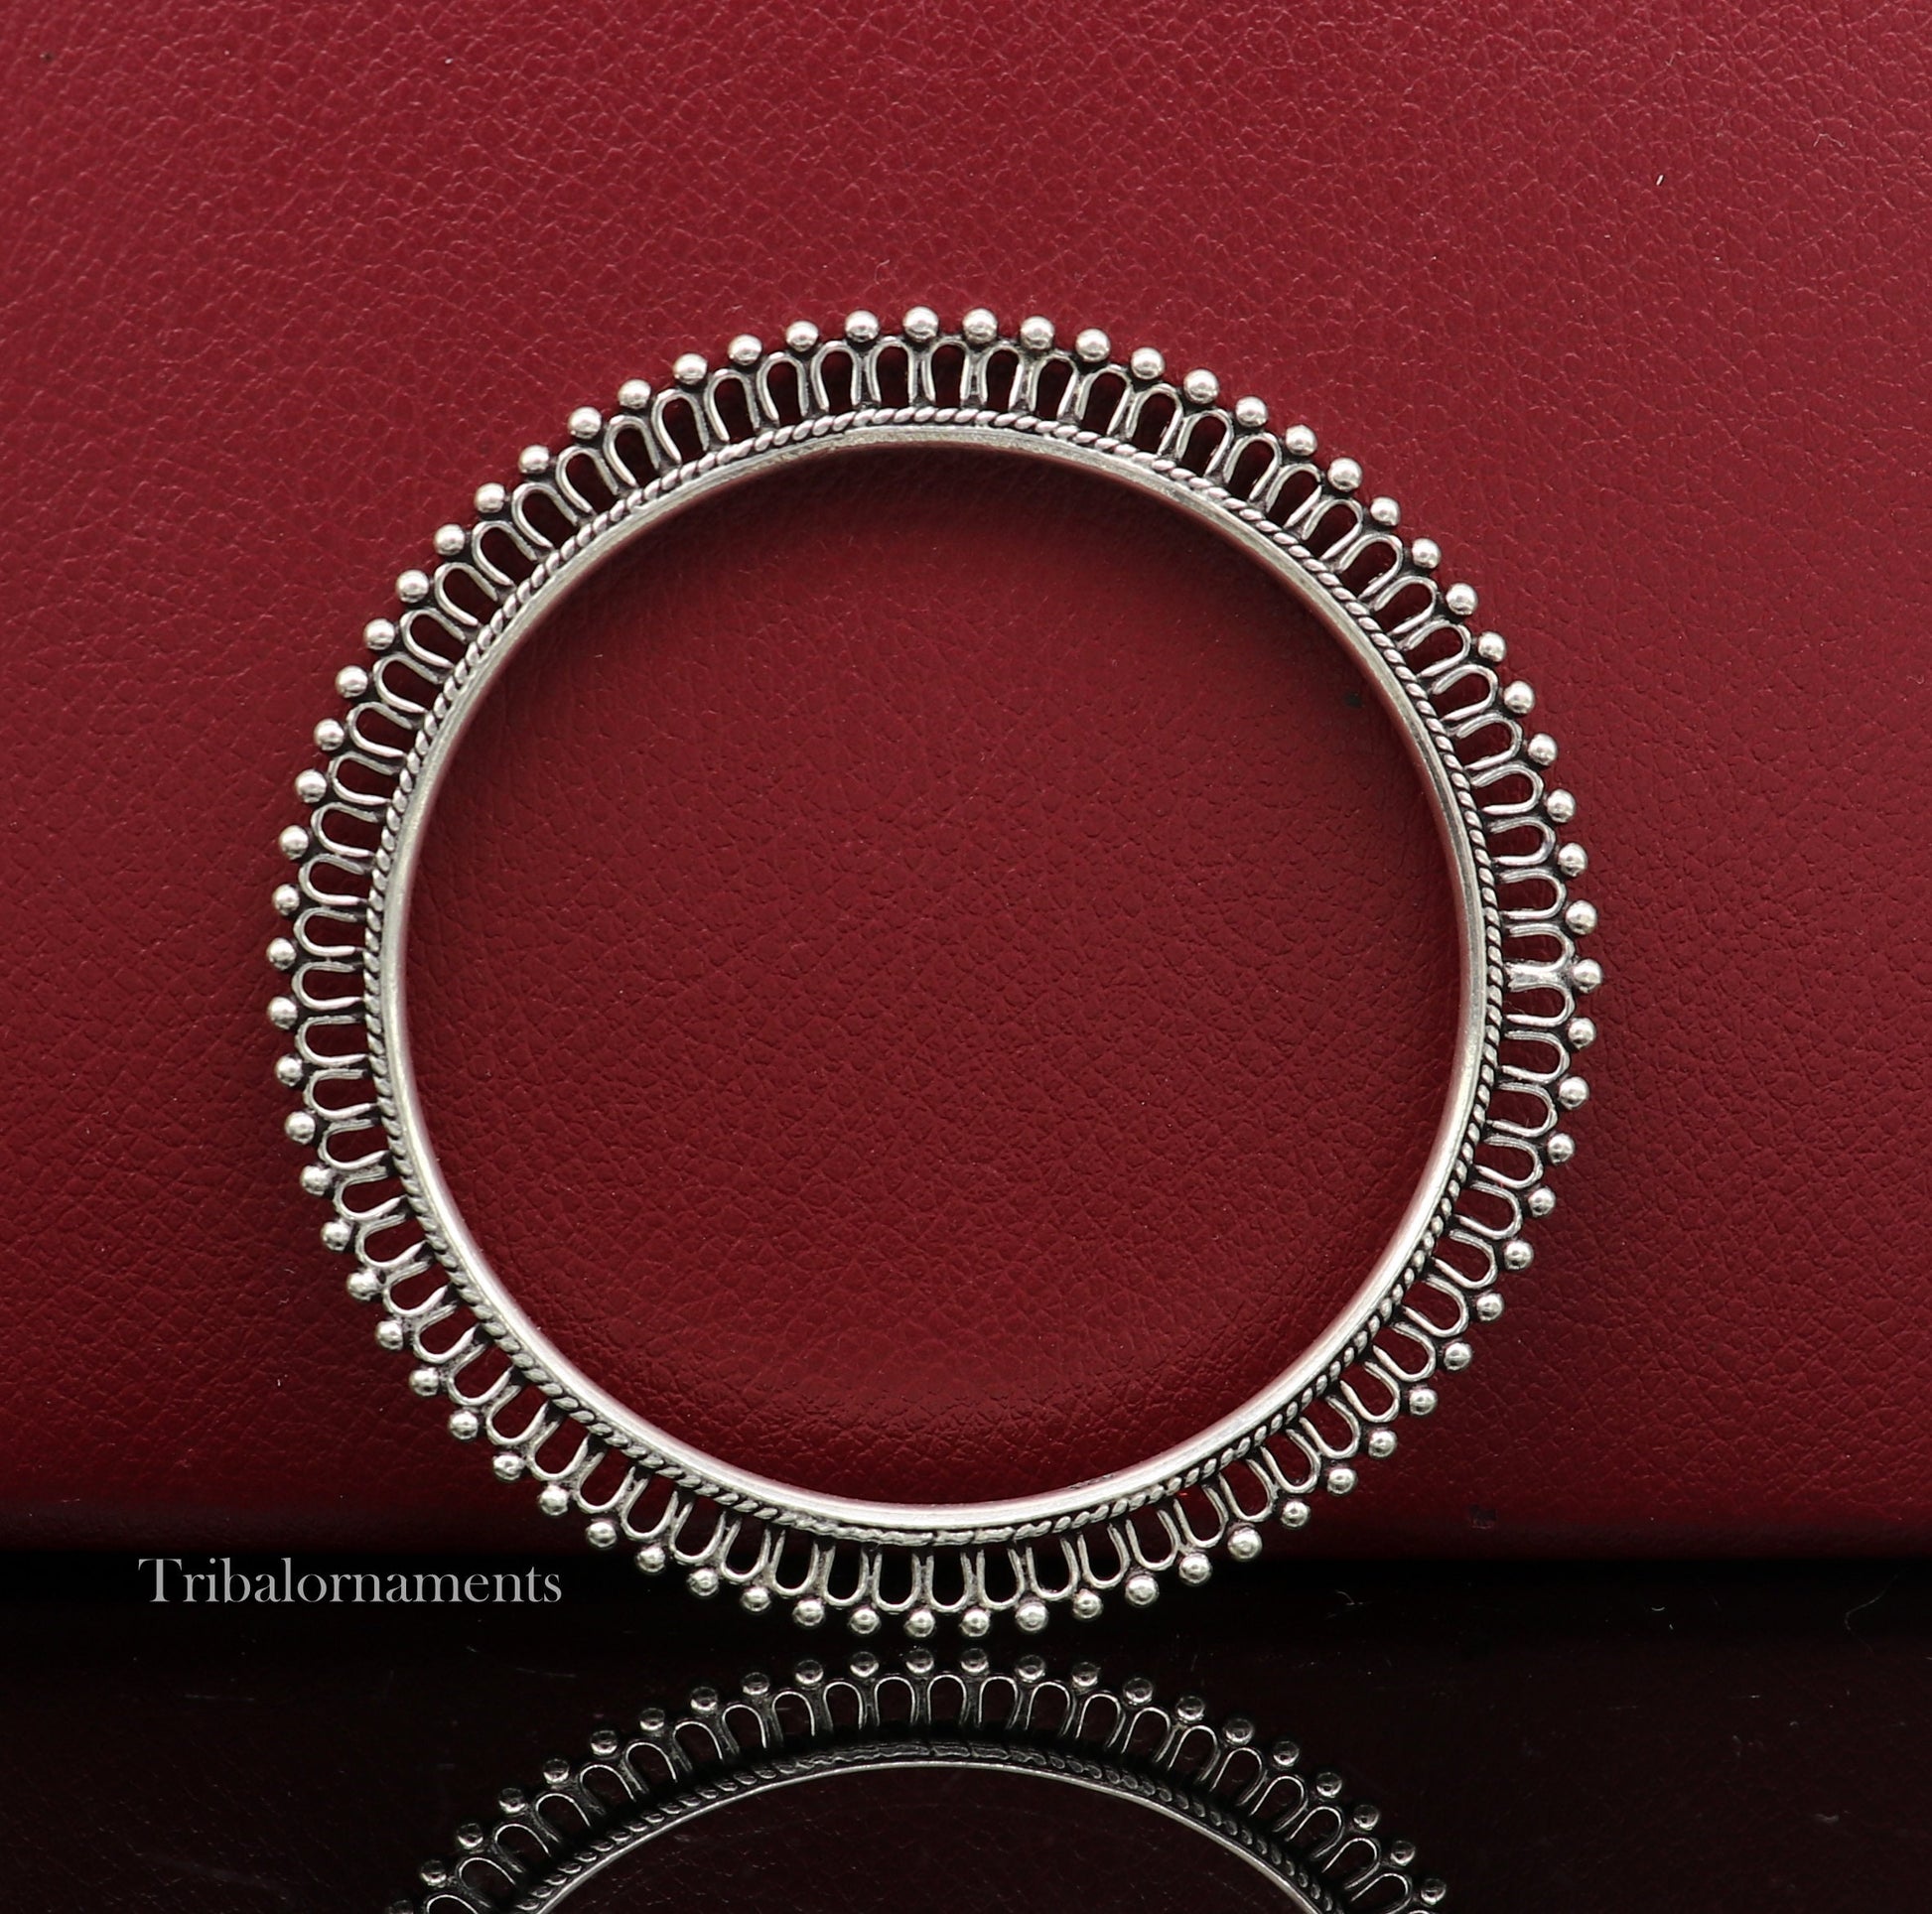 92.5 sterling silver handmade gorgeous bangle bracelet with tiny silver beads gorgeous charm bracelet kada for women ethnic jewelry nba202 - TRIBAL ORNAMENTS